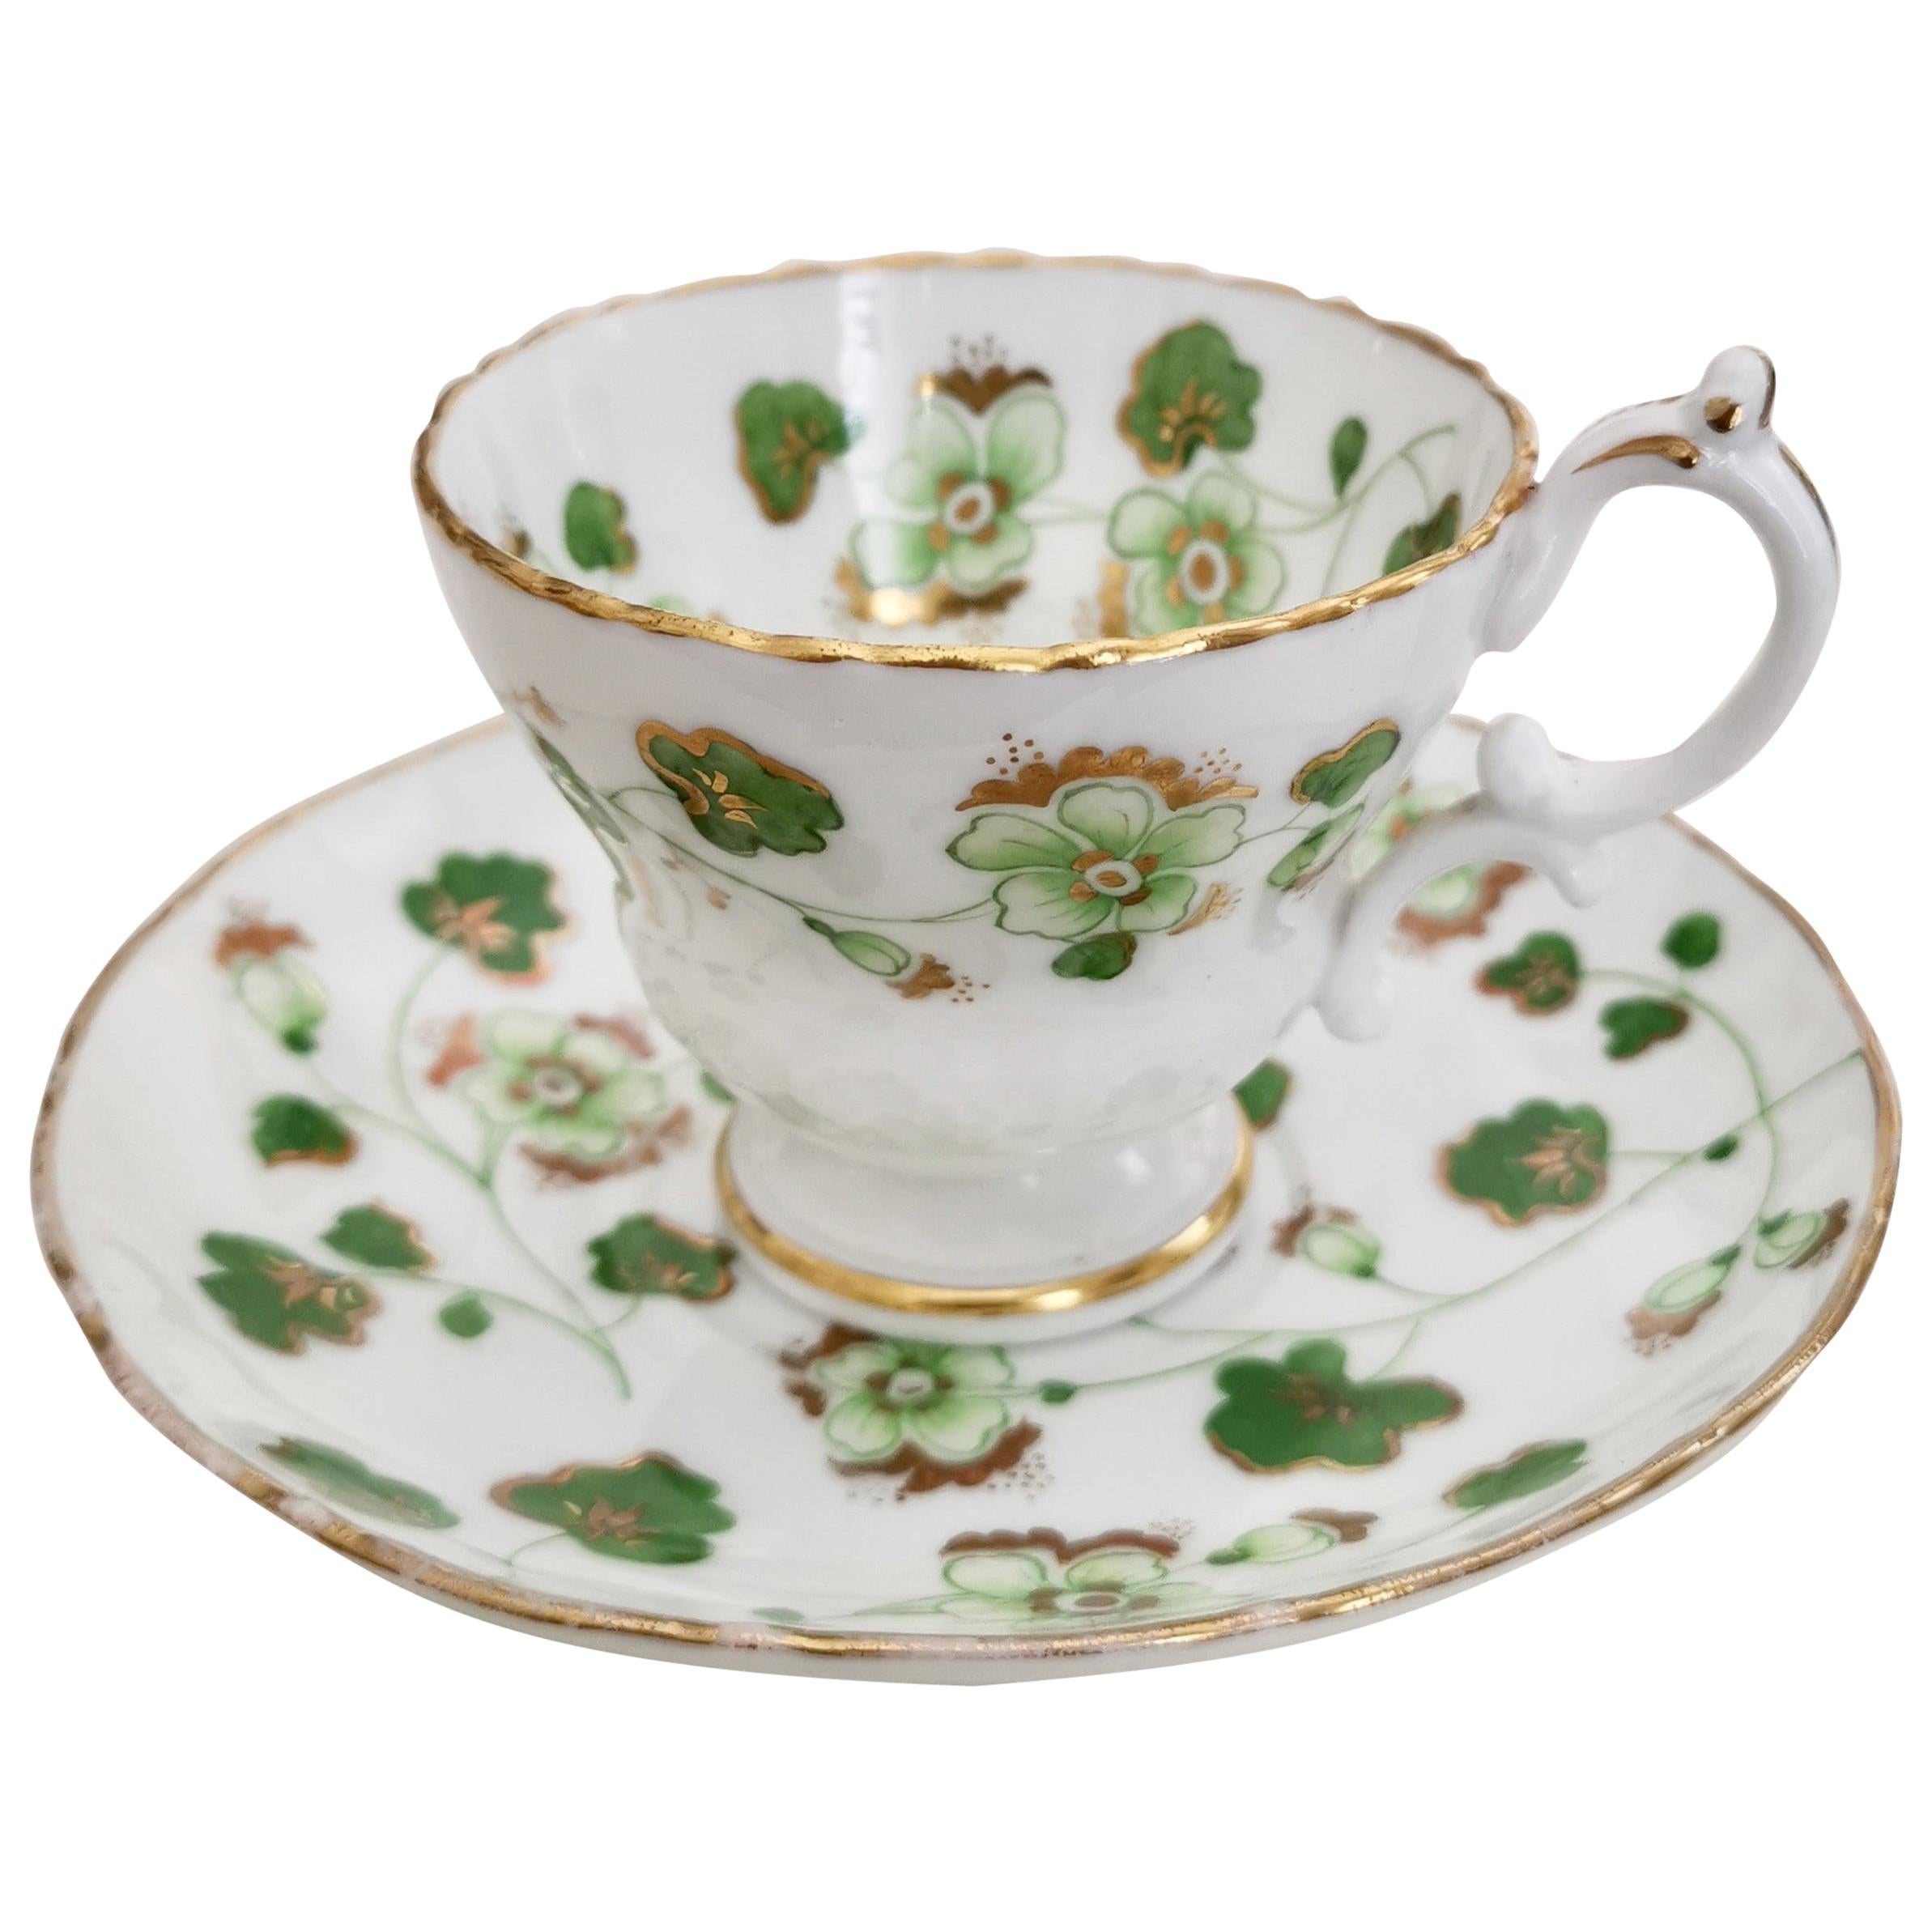 Ridgway Porcelain Coffee Cup, Green Floral Design, Victorian, circa 1840